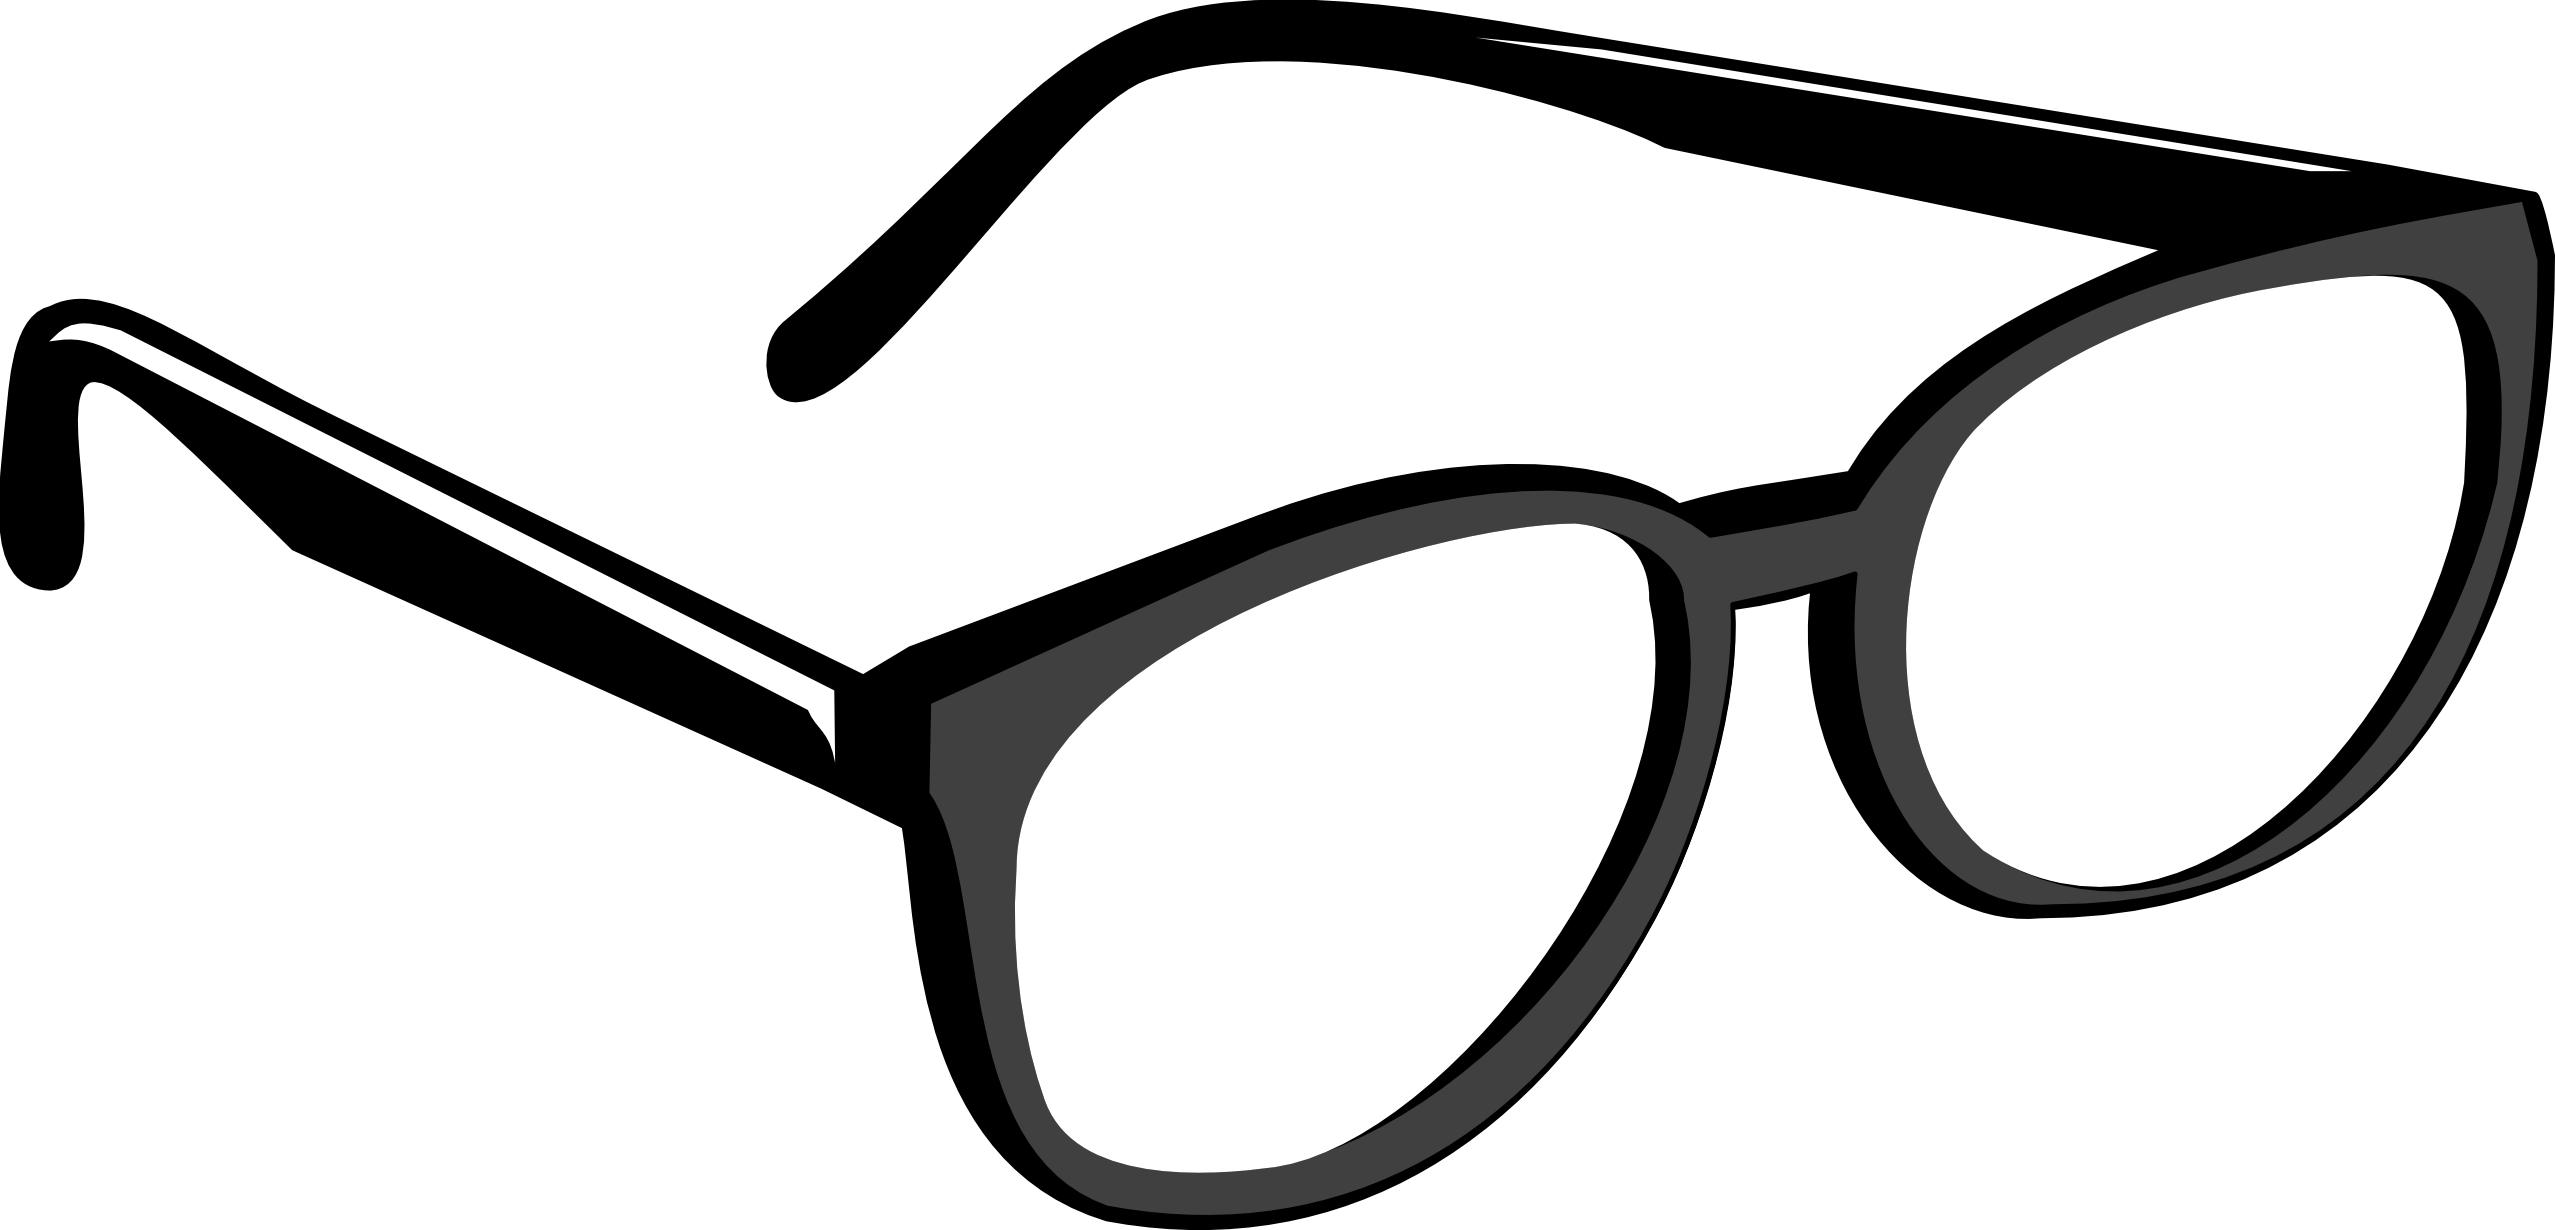 Glasses clipart black and white